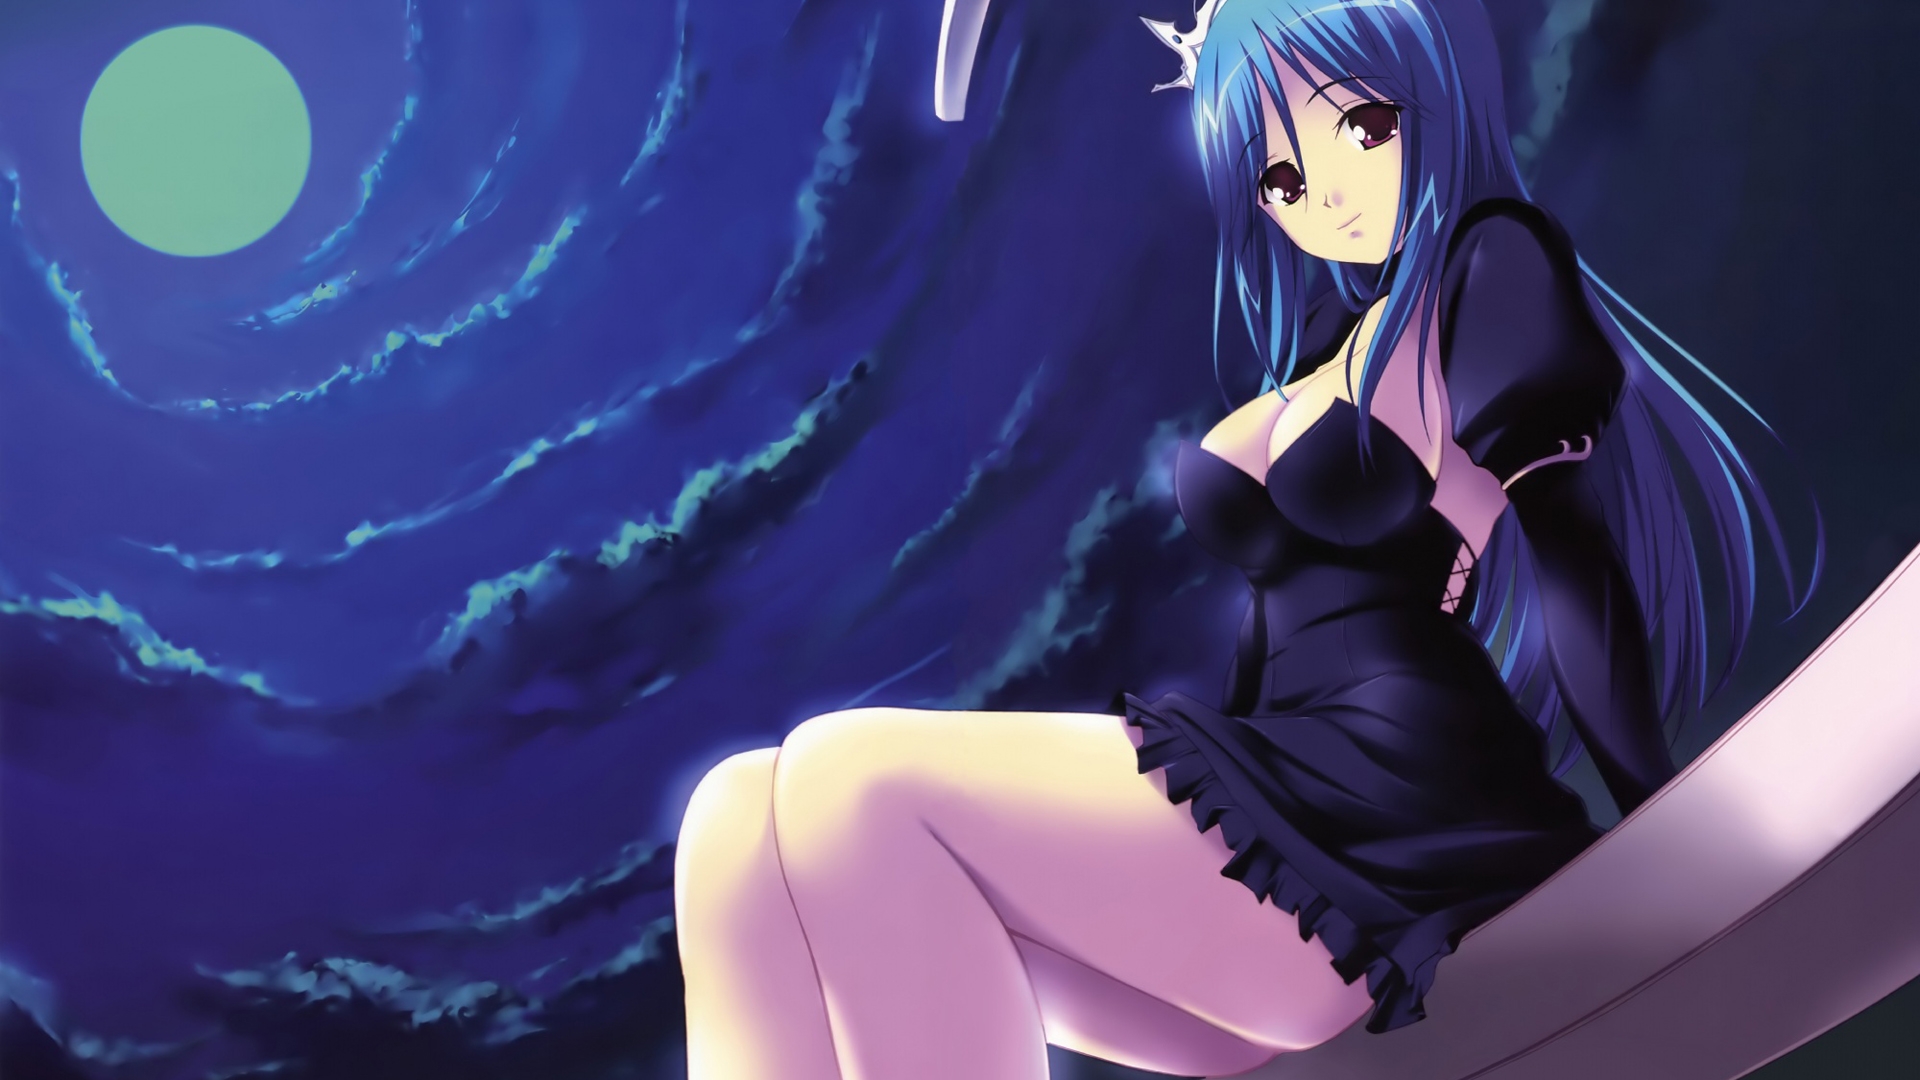 Ahegao Anime Girl with Blue Hair - wide 8